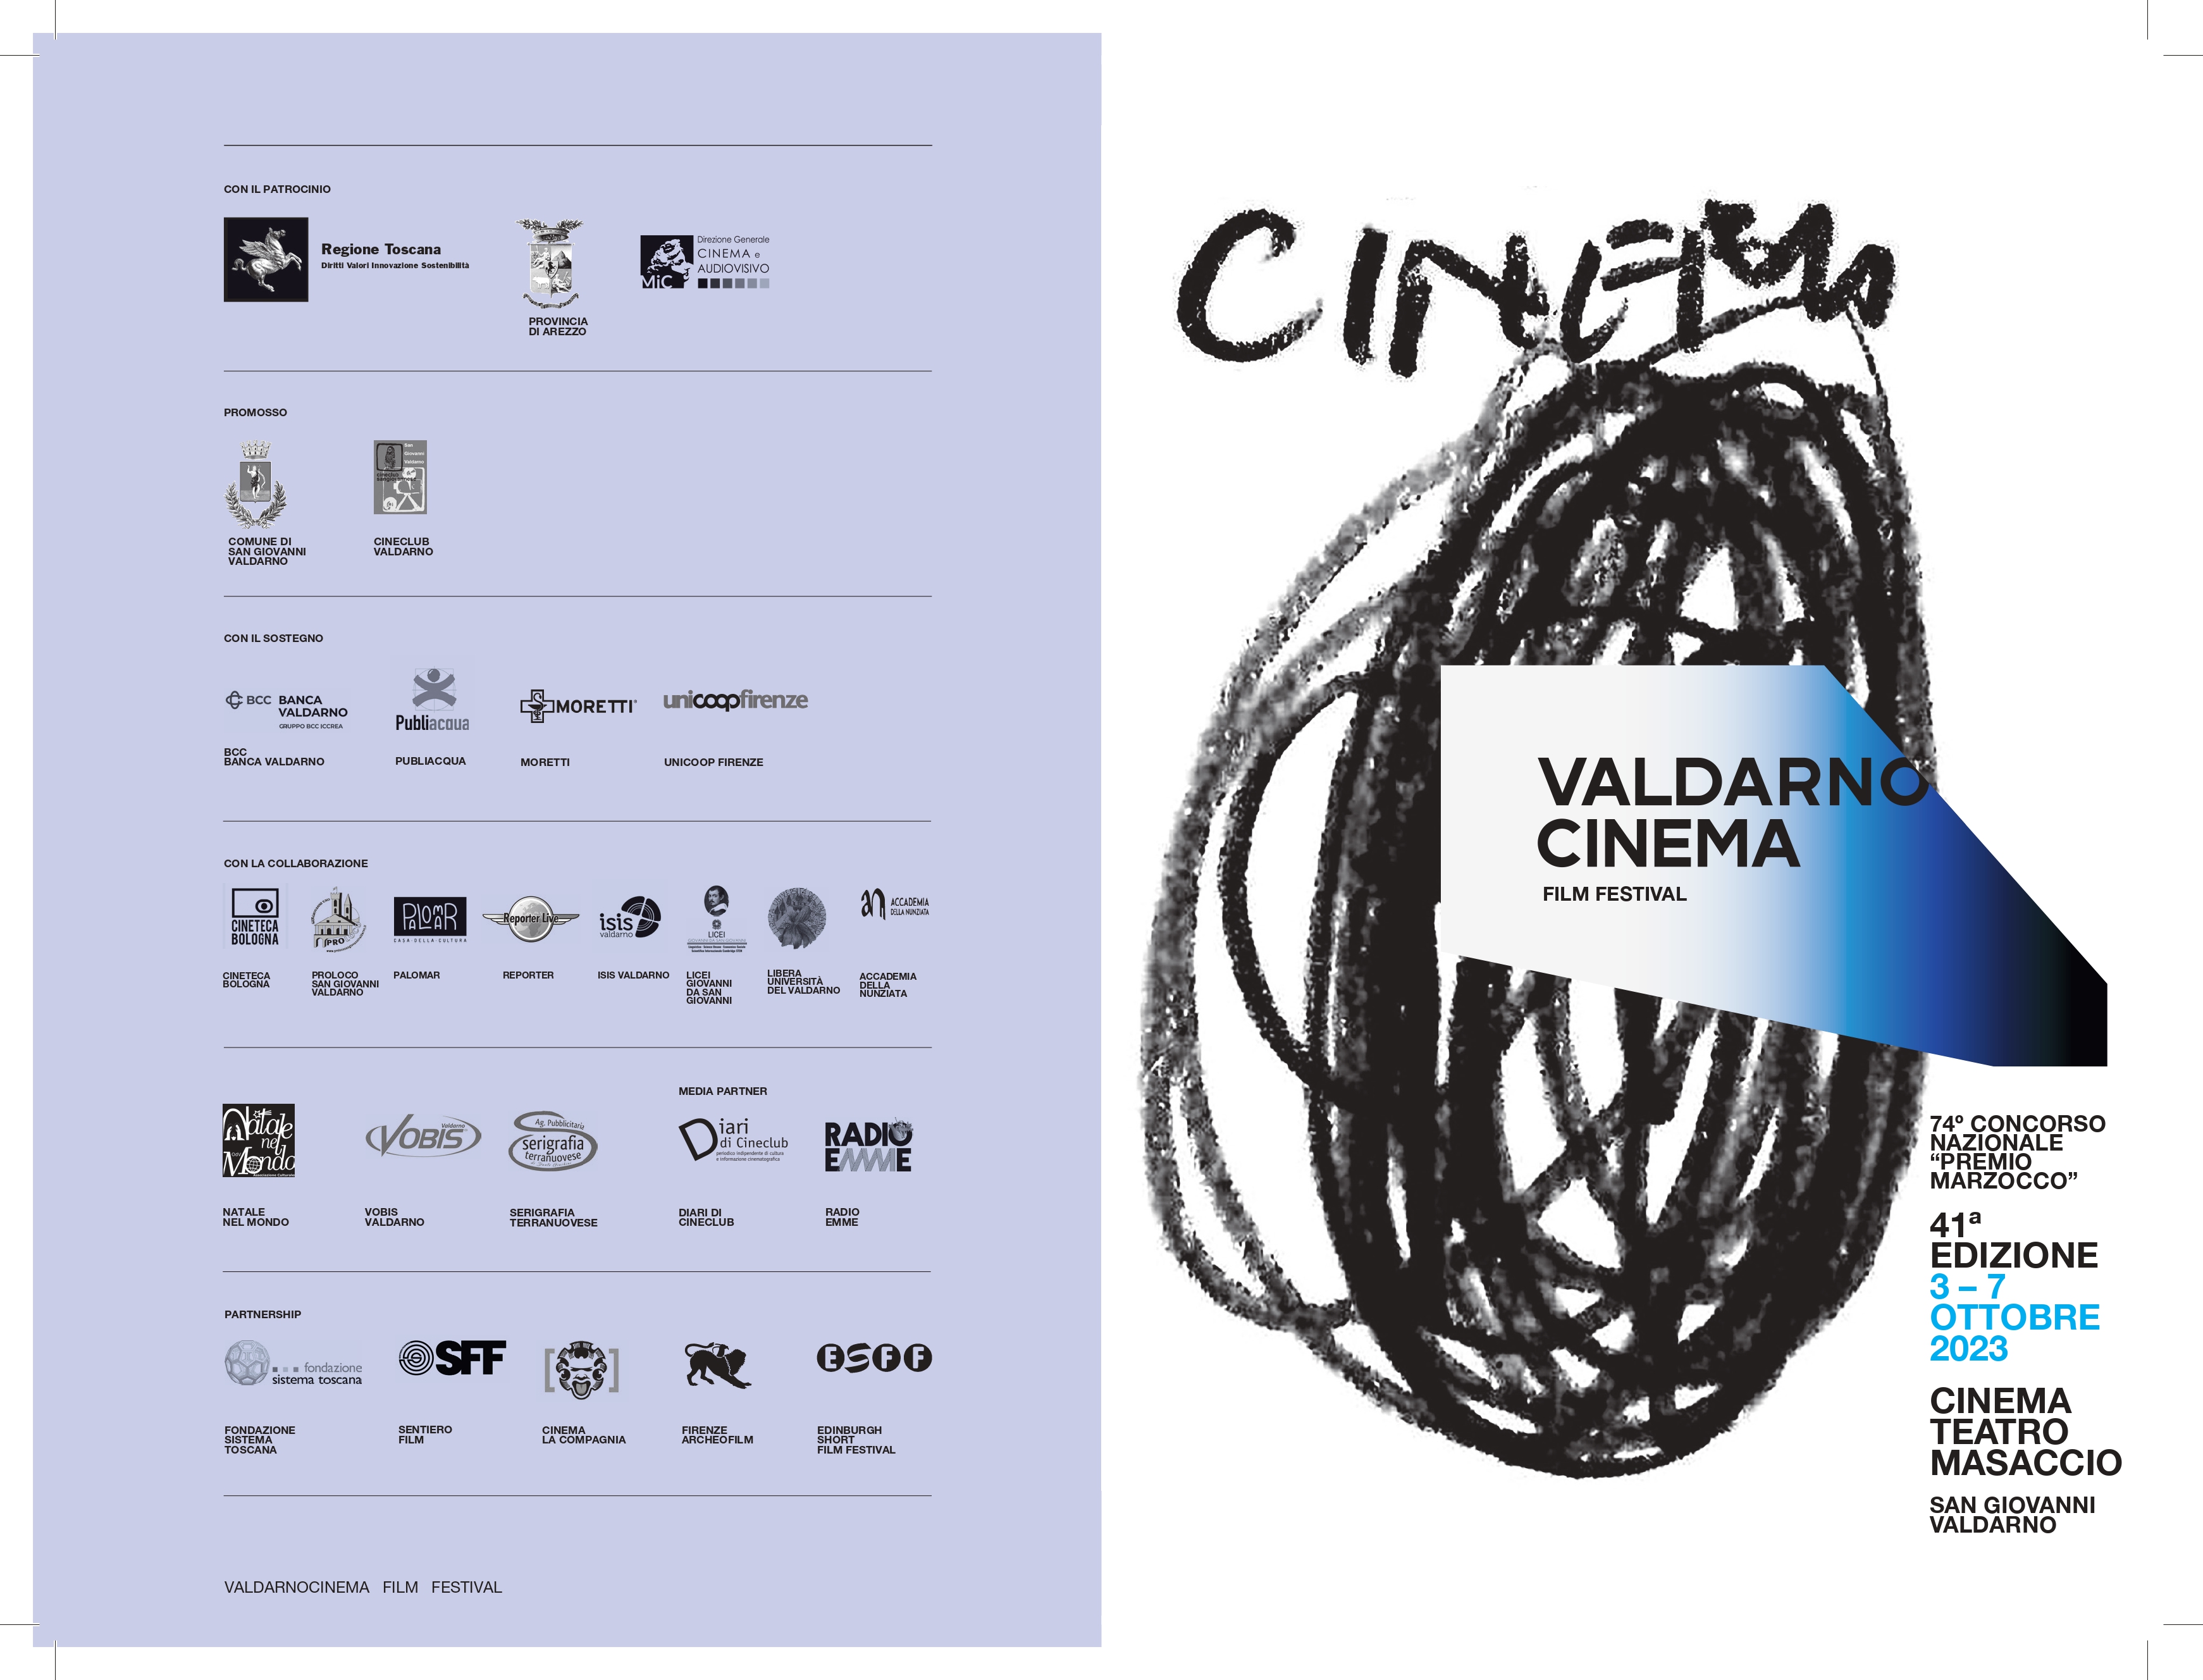 ValdarnoCinema Film Festival: il programma